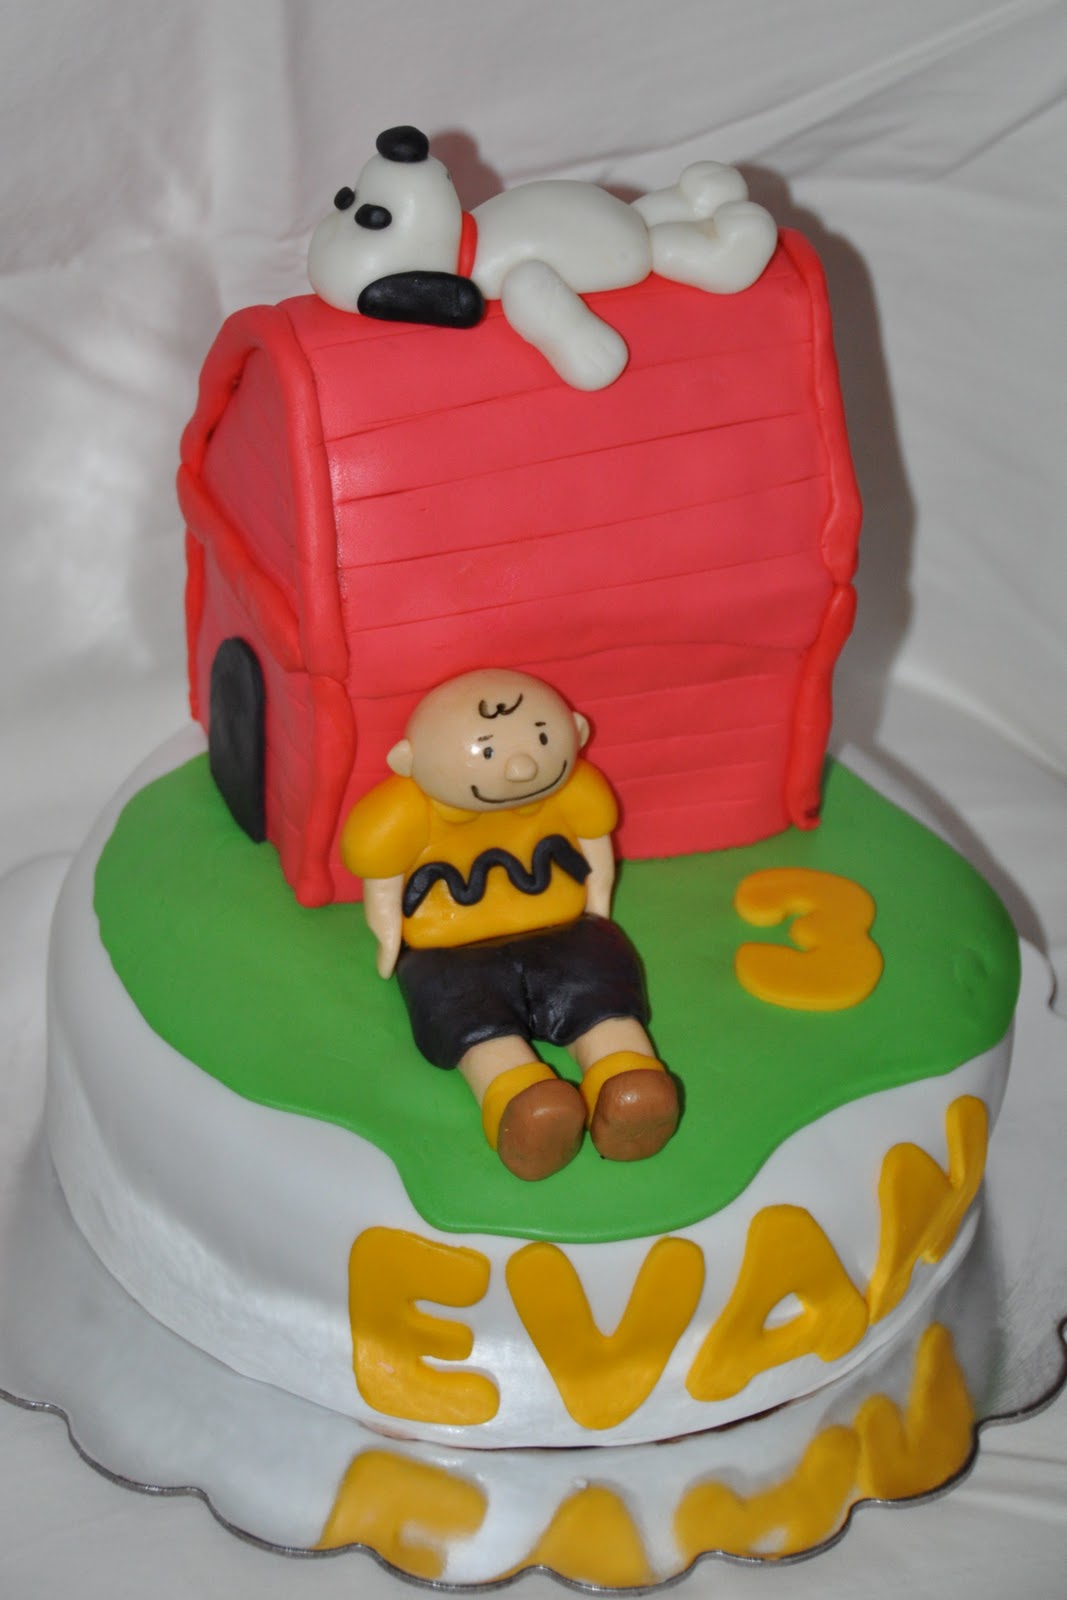 Bad Charlie Brown Cake